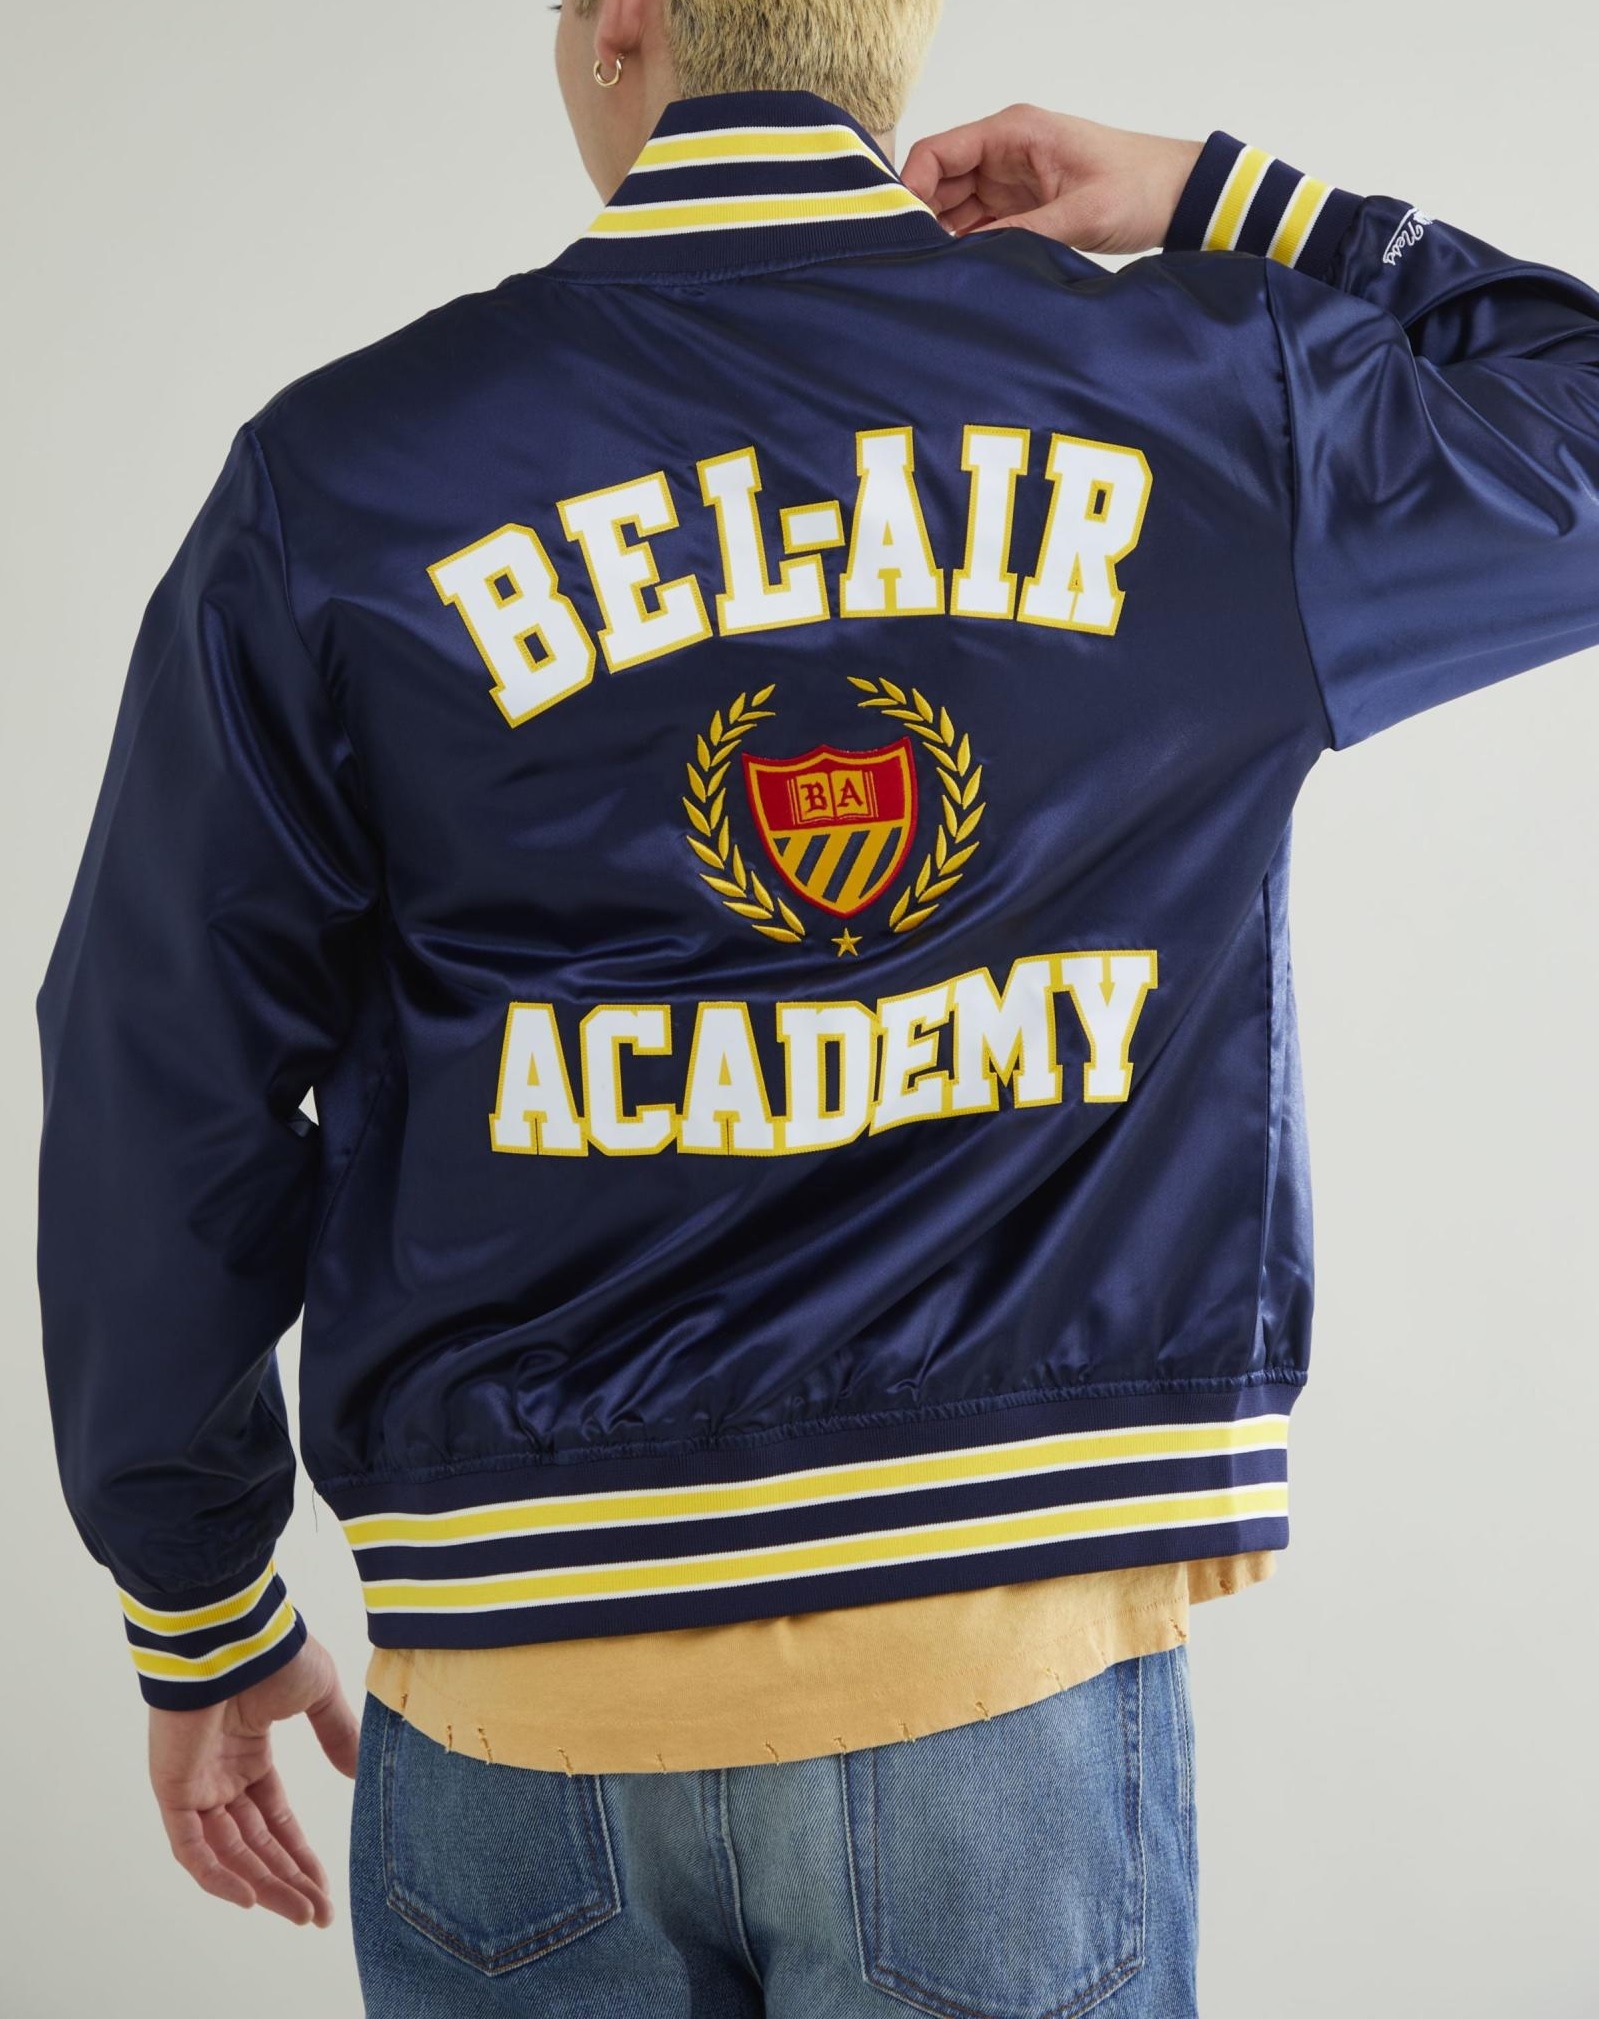 Mitchell & Ness X Bel-air Academy Satin Jacket